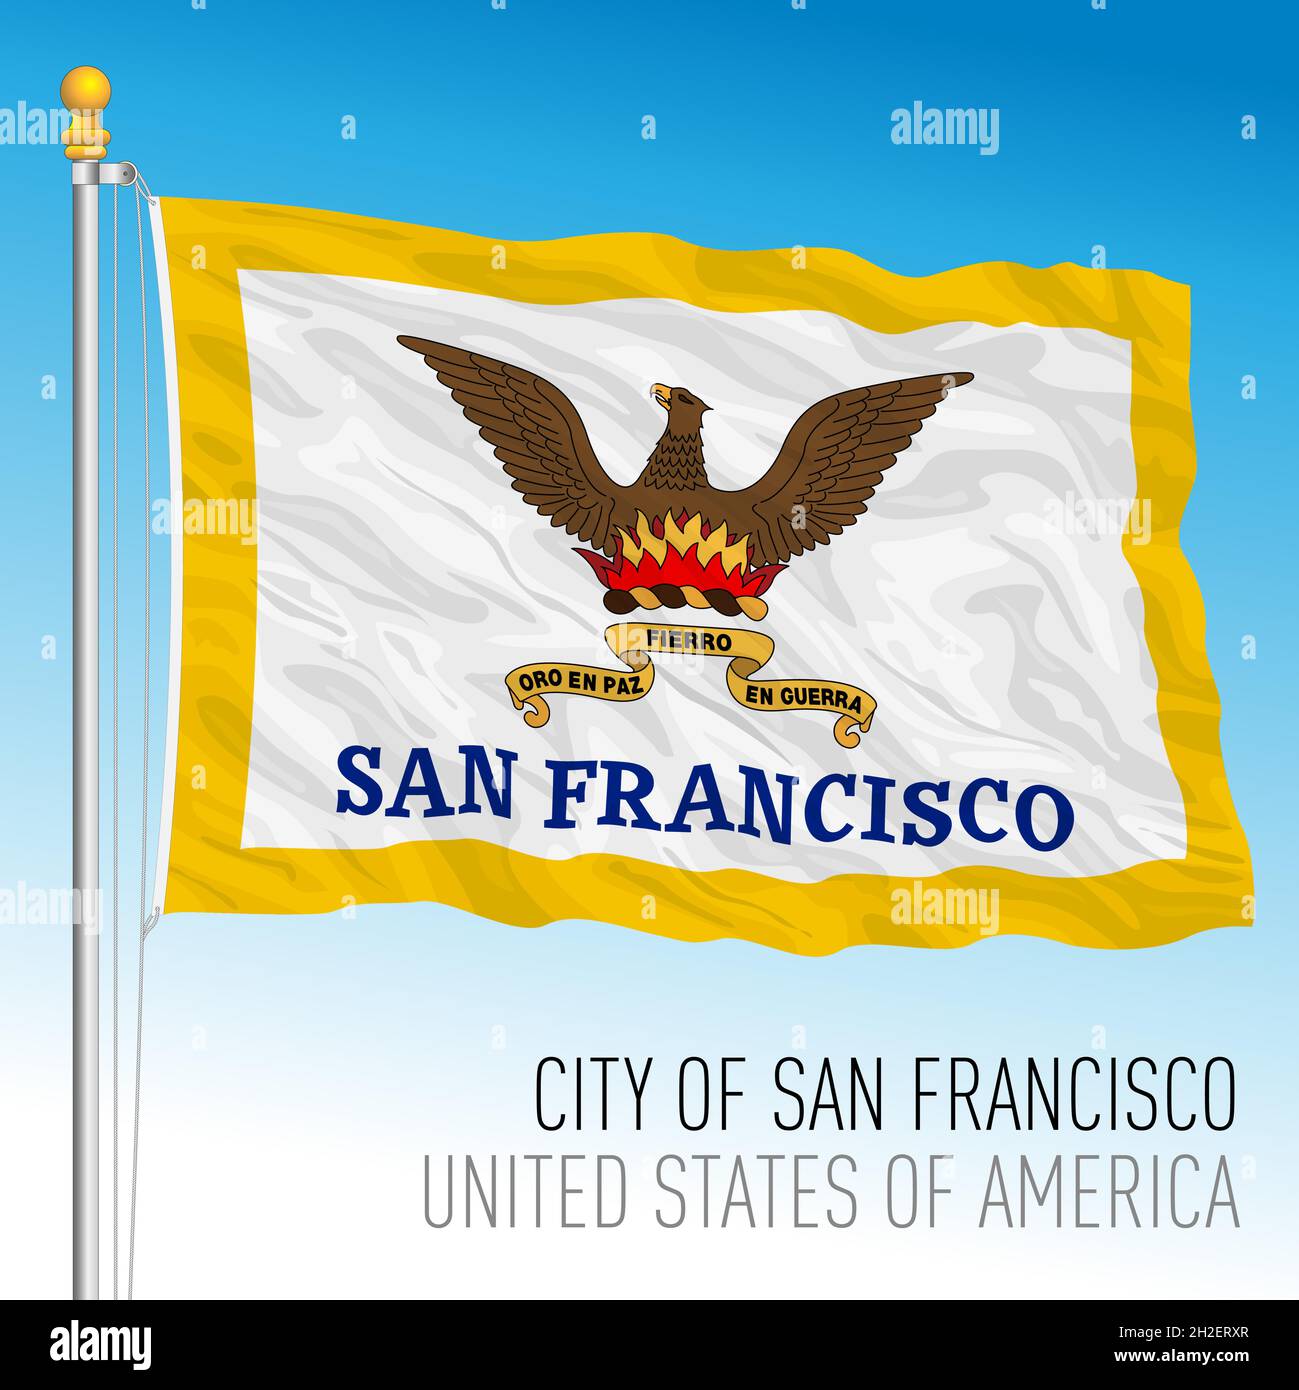 City of San Francisco flag, California, United States, vector illustration Stock Vector